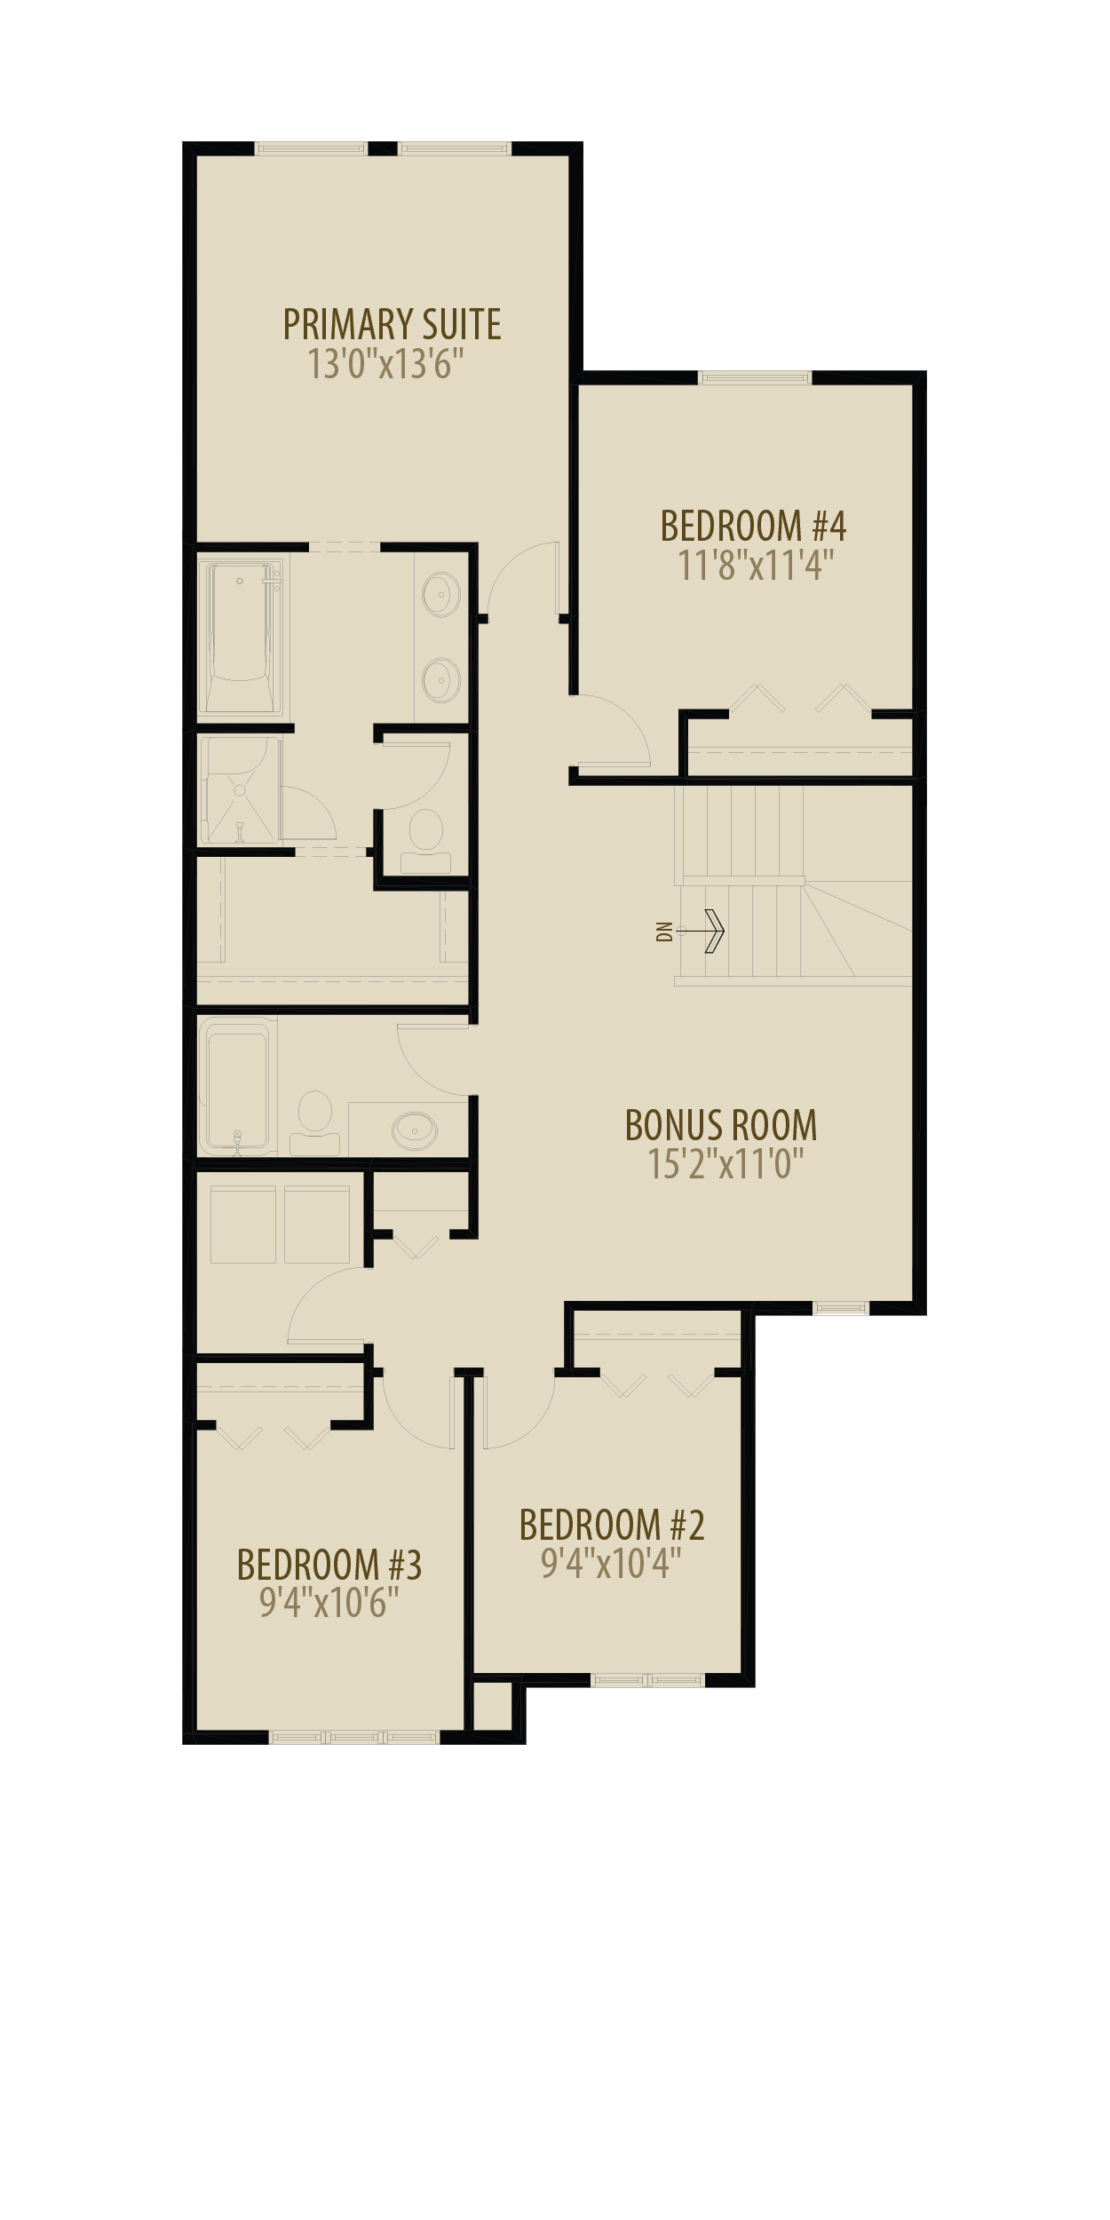 4th Bedroom Bonus Room Adds 72 sq ft